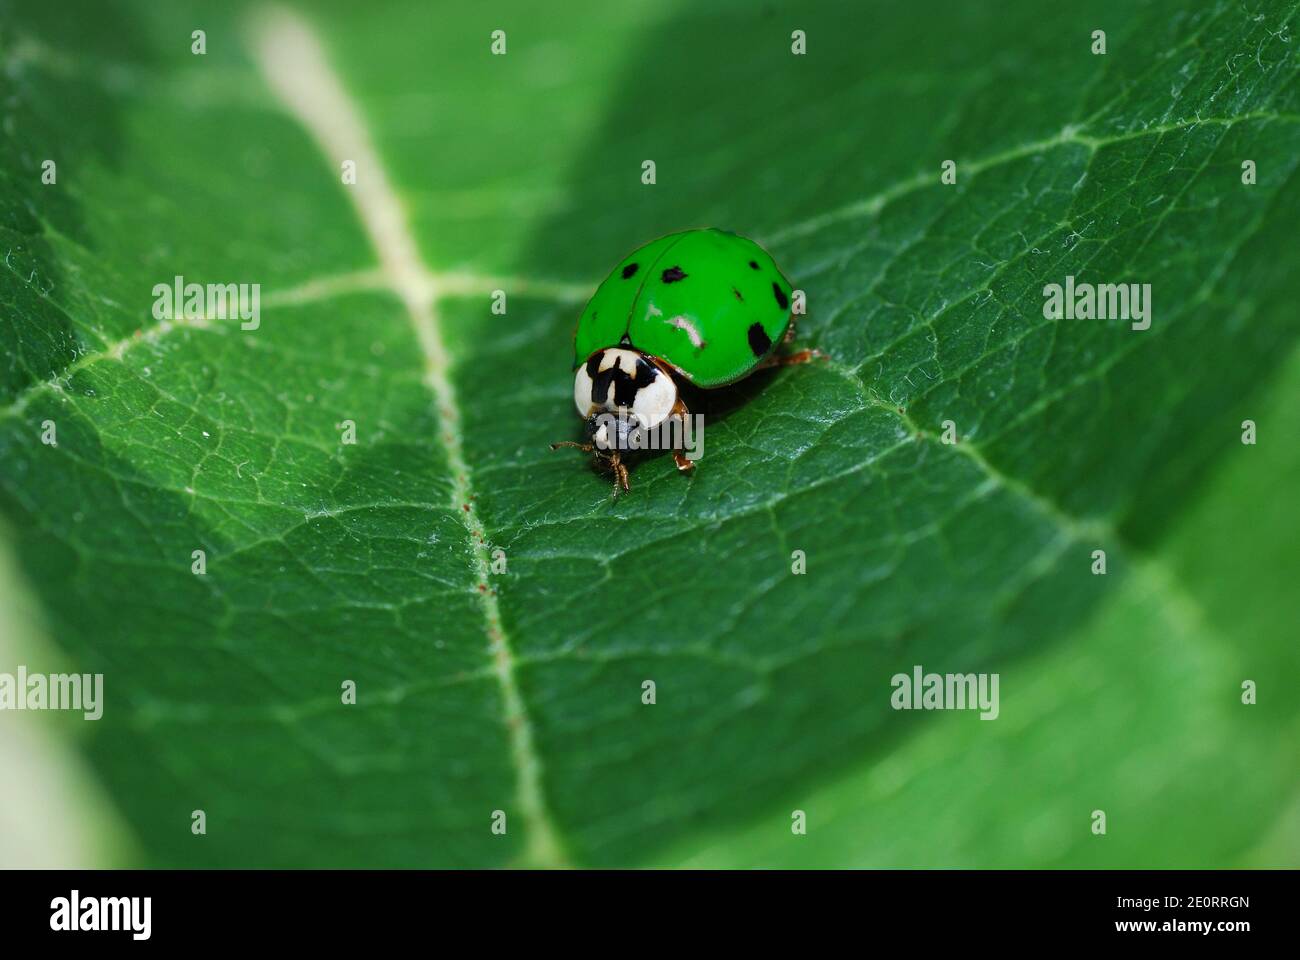 small green ladybug sitting on a big green leaf photomontage Stock Photo